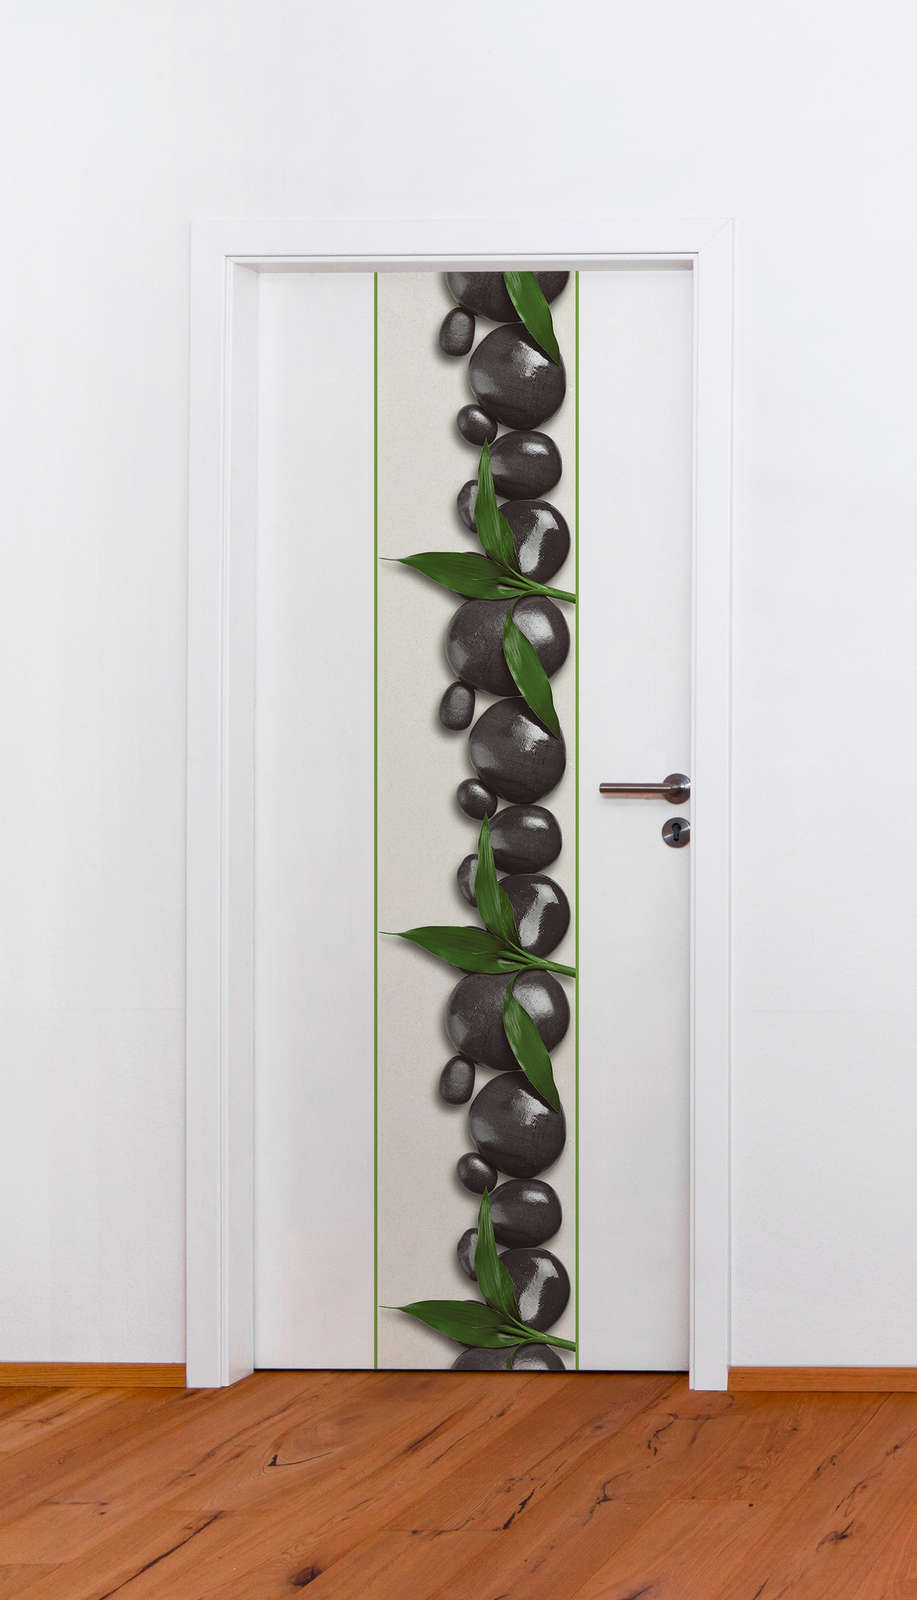             3D motif wallpaper with wellness stones - cream, green
        